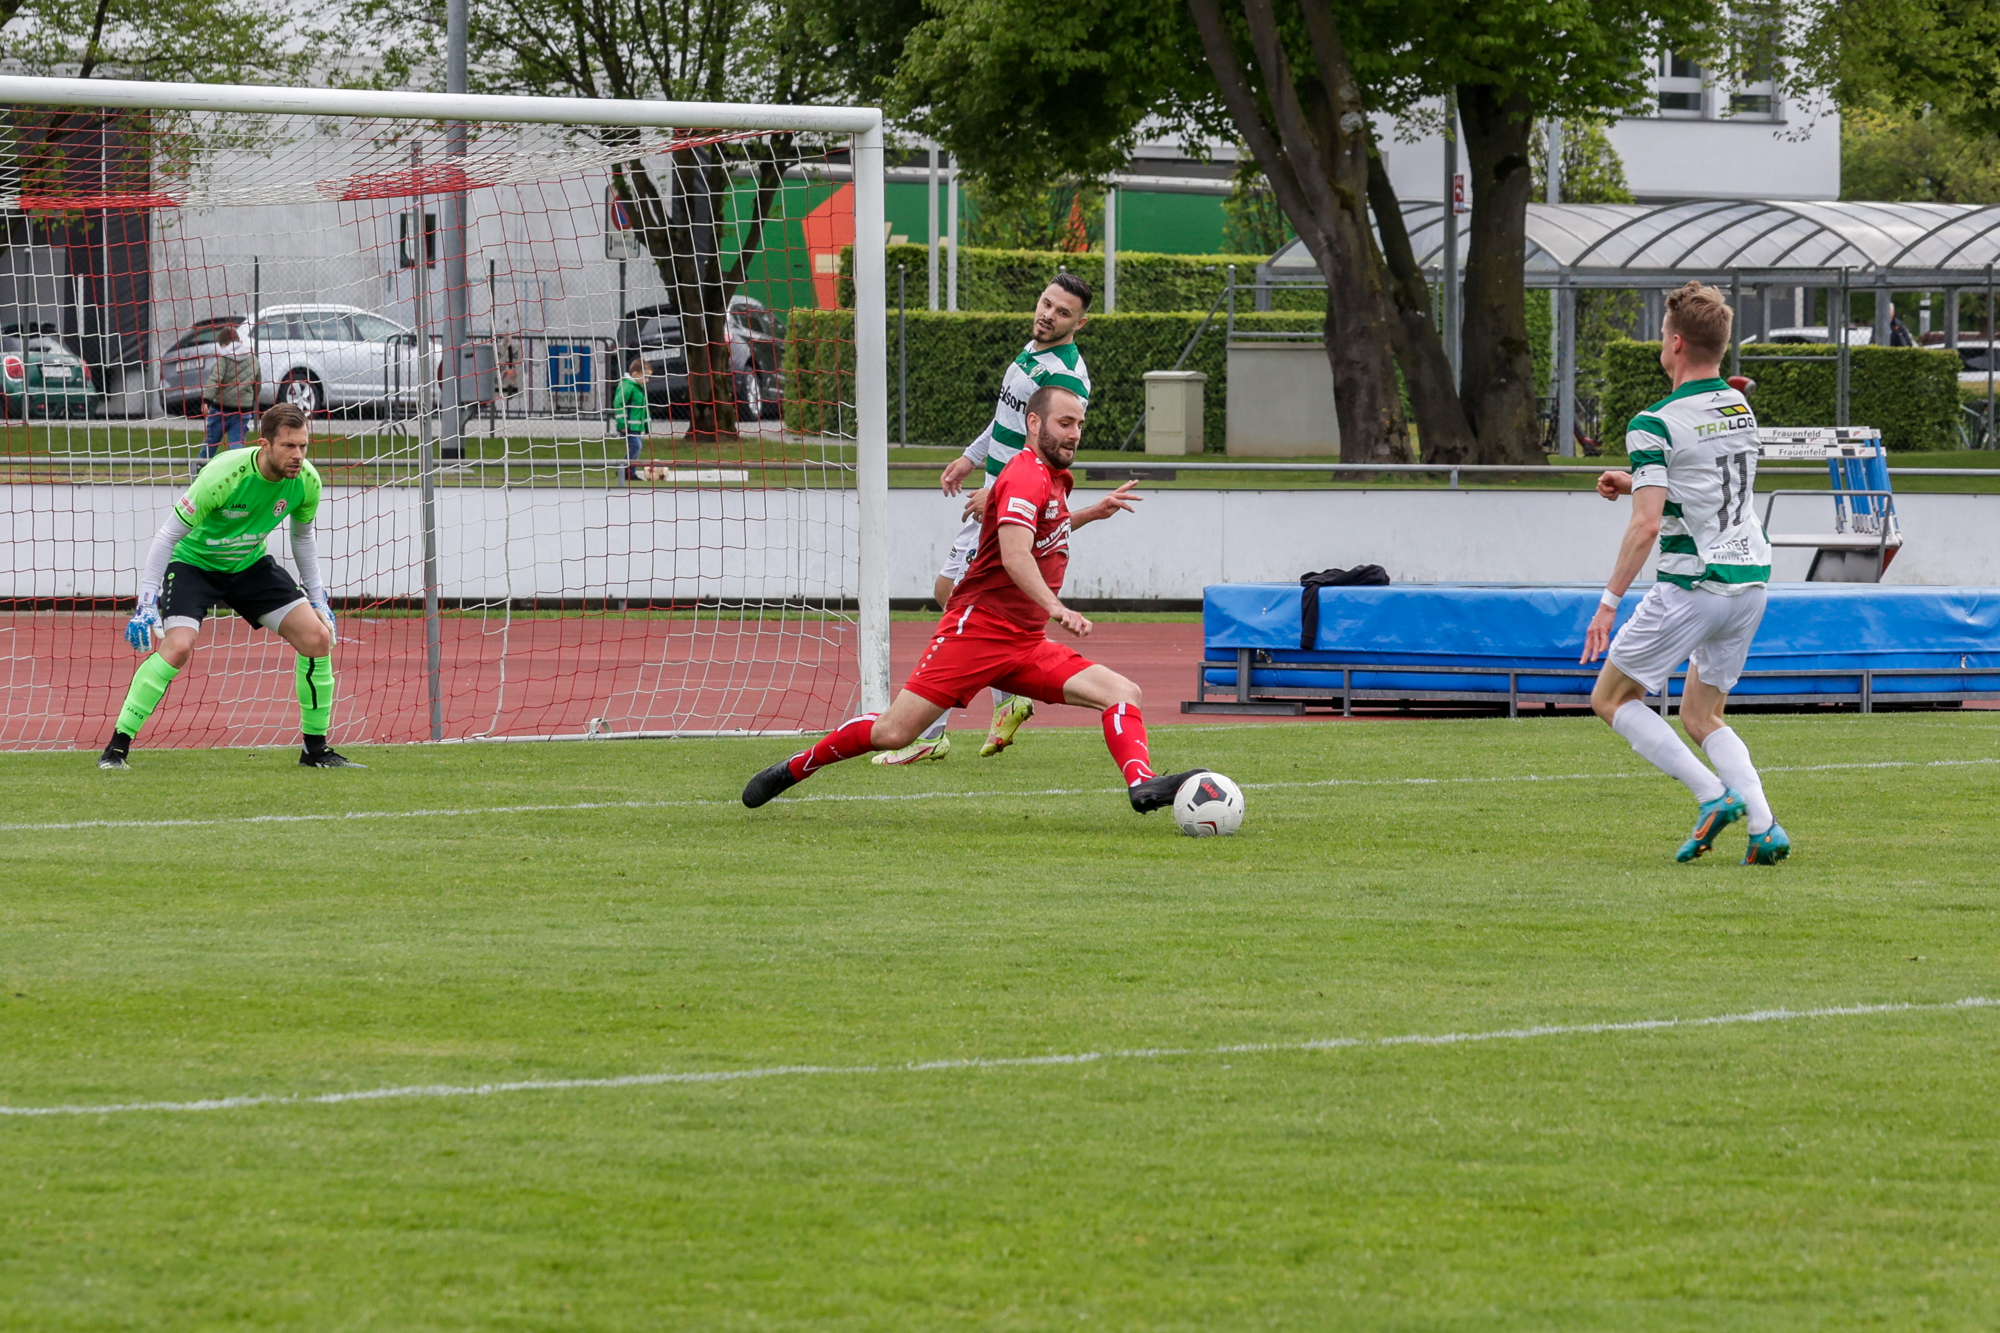 FC Frauenfeld - FCK 05 - 30-04-2022